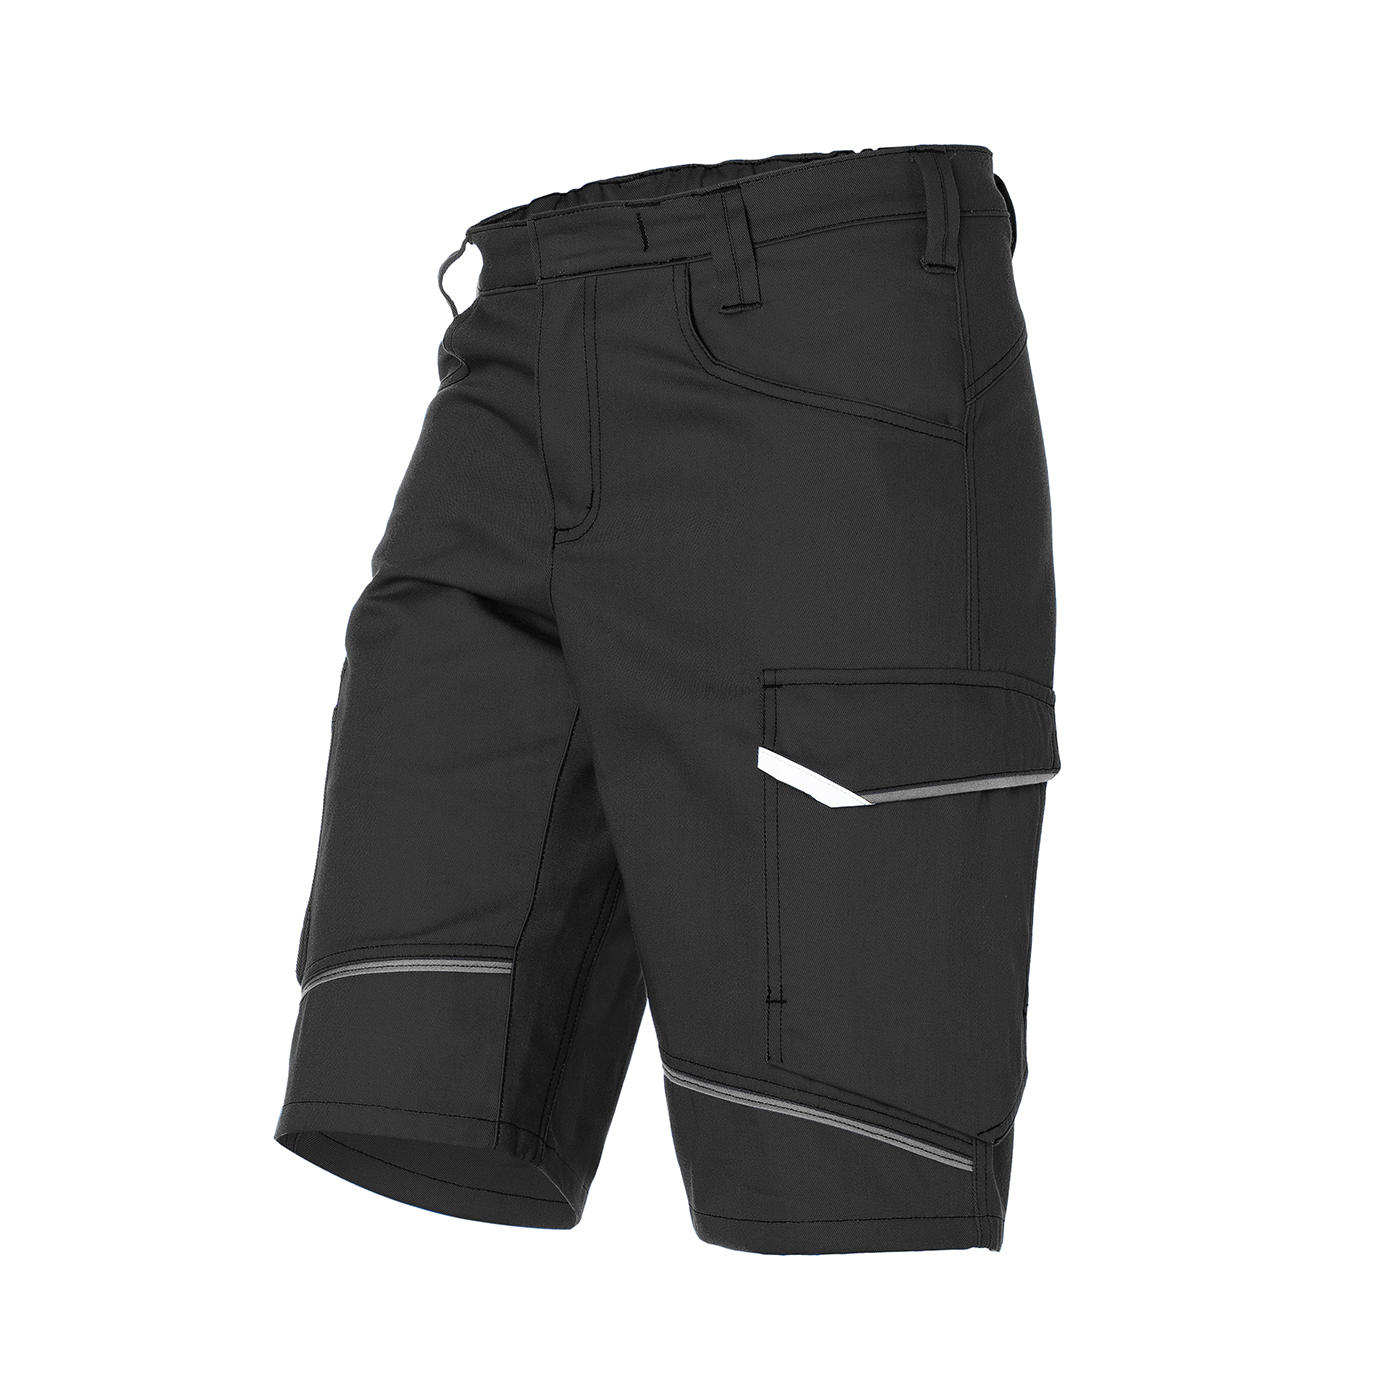 KÜBLER ICONIQ Shorts | schwarz/anthrazit | 40 | 2440 5336-9997-10-40